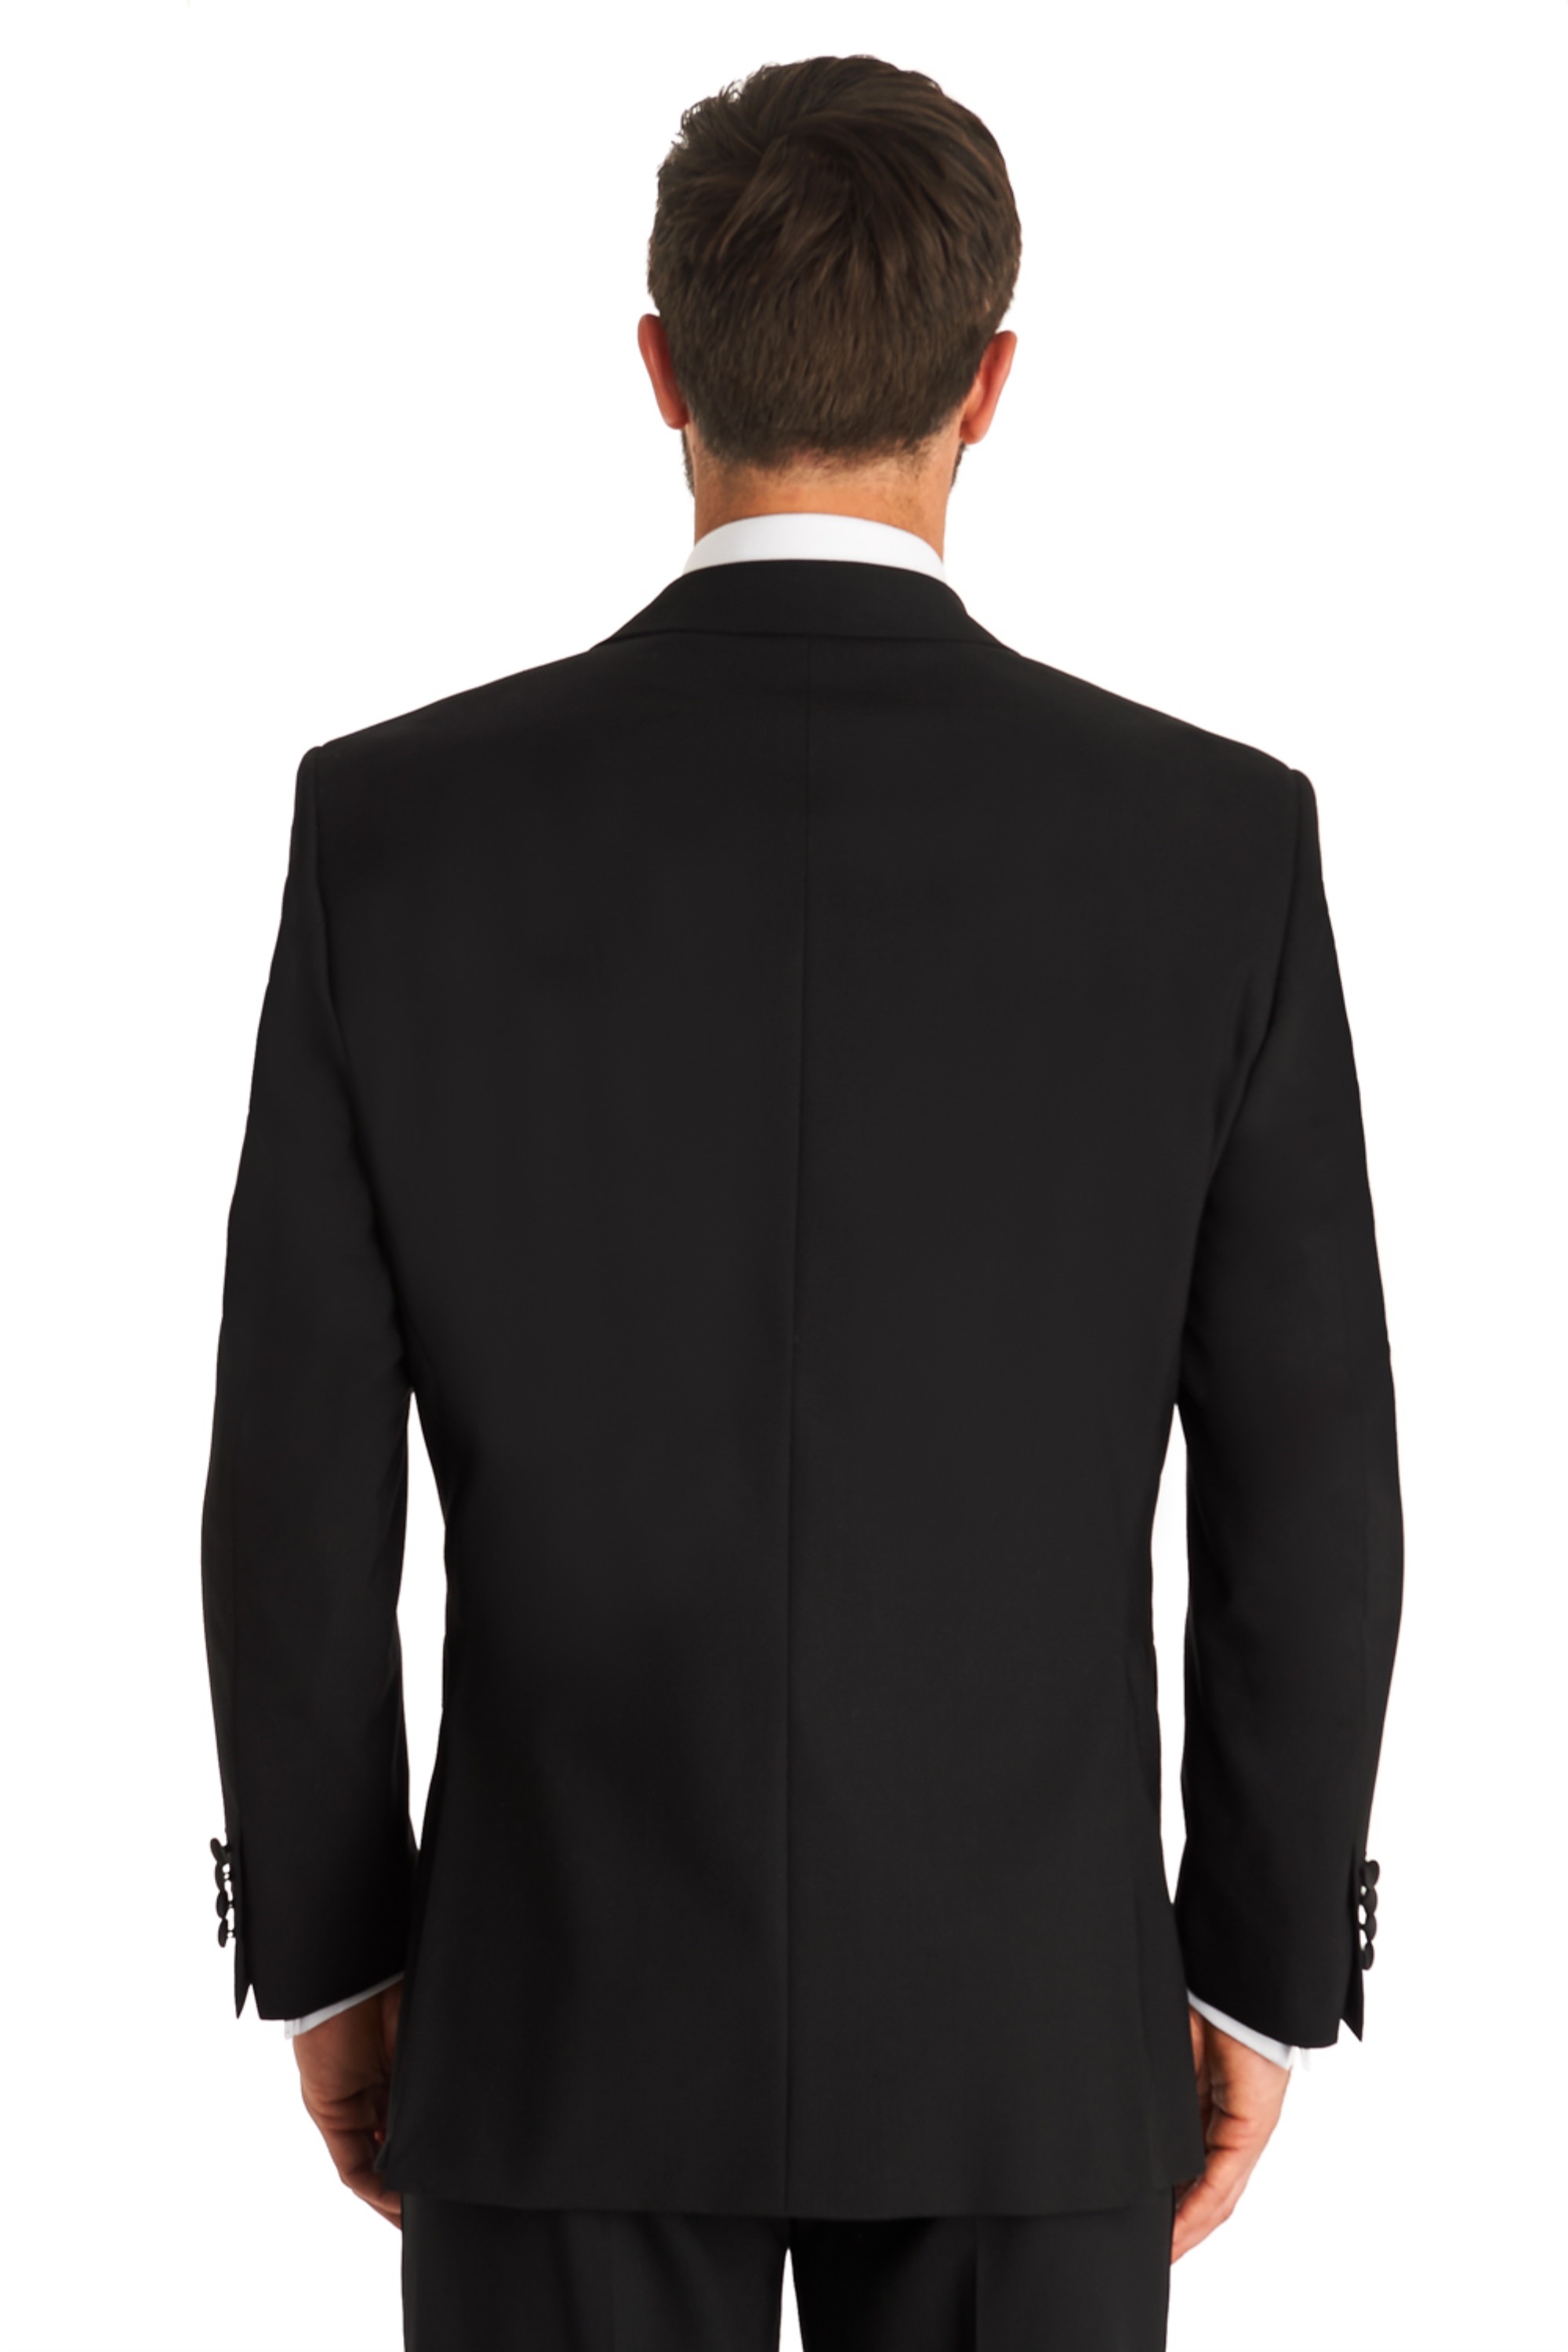 Moss Bros Regular Fit Black Notch Lapel Tuxedo | Buy Online at Moss